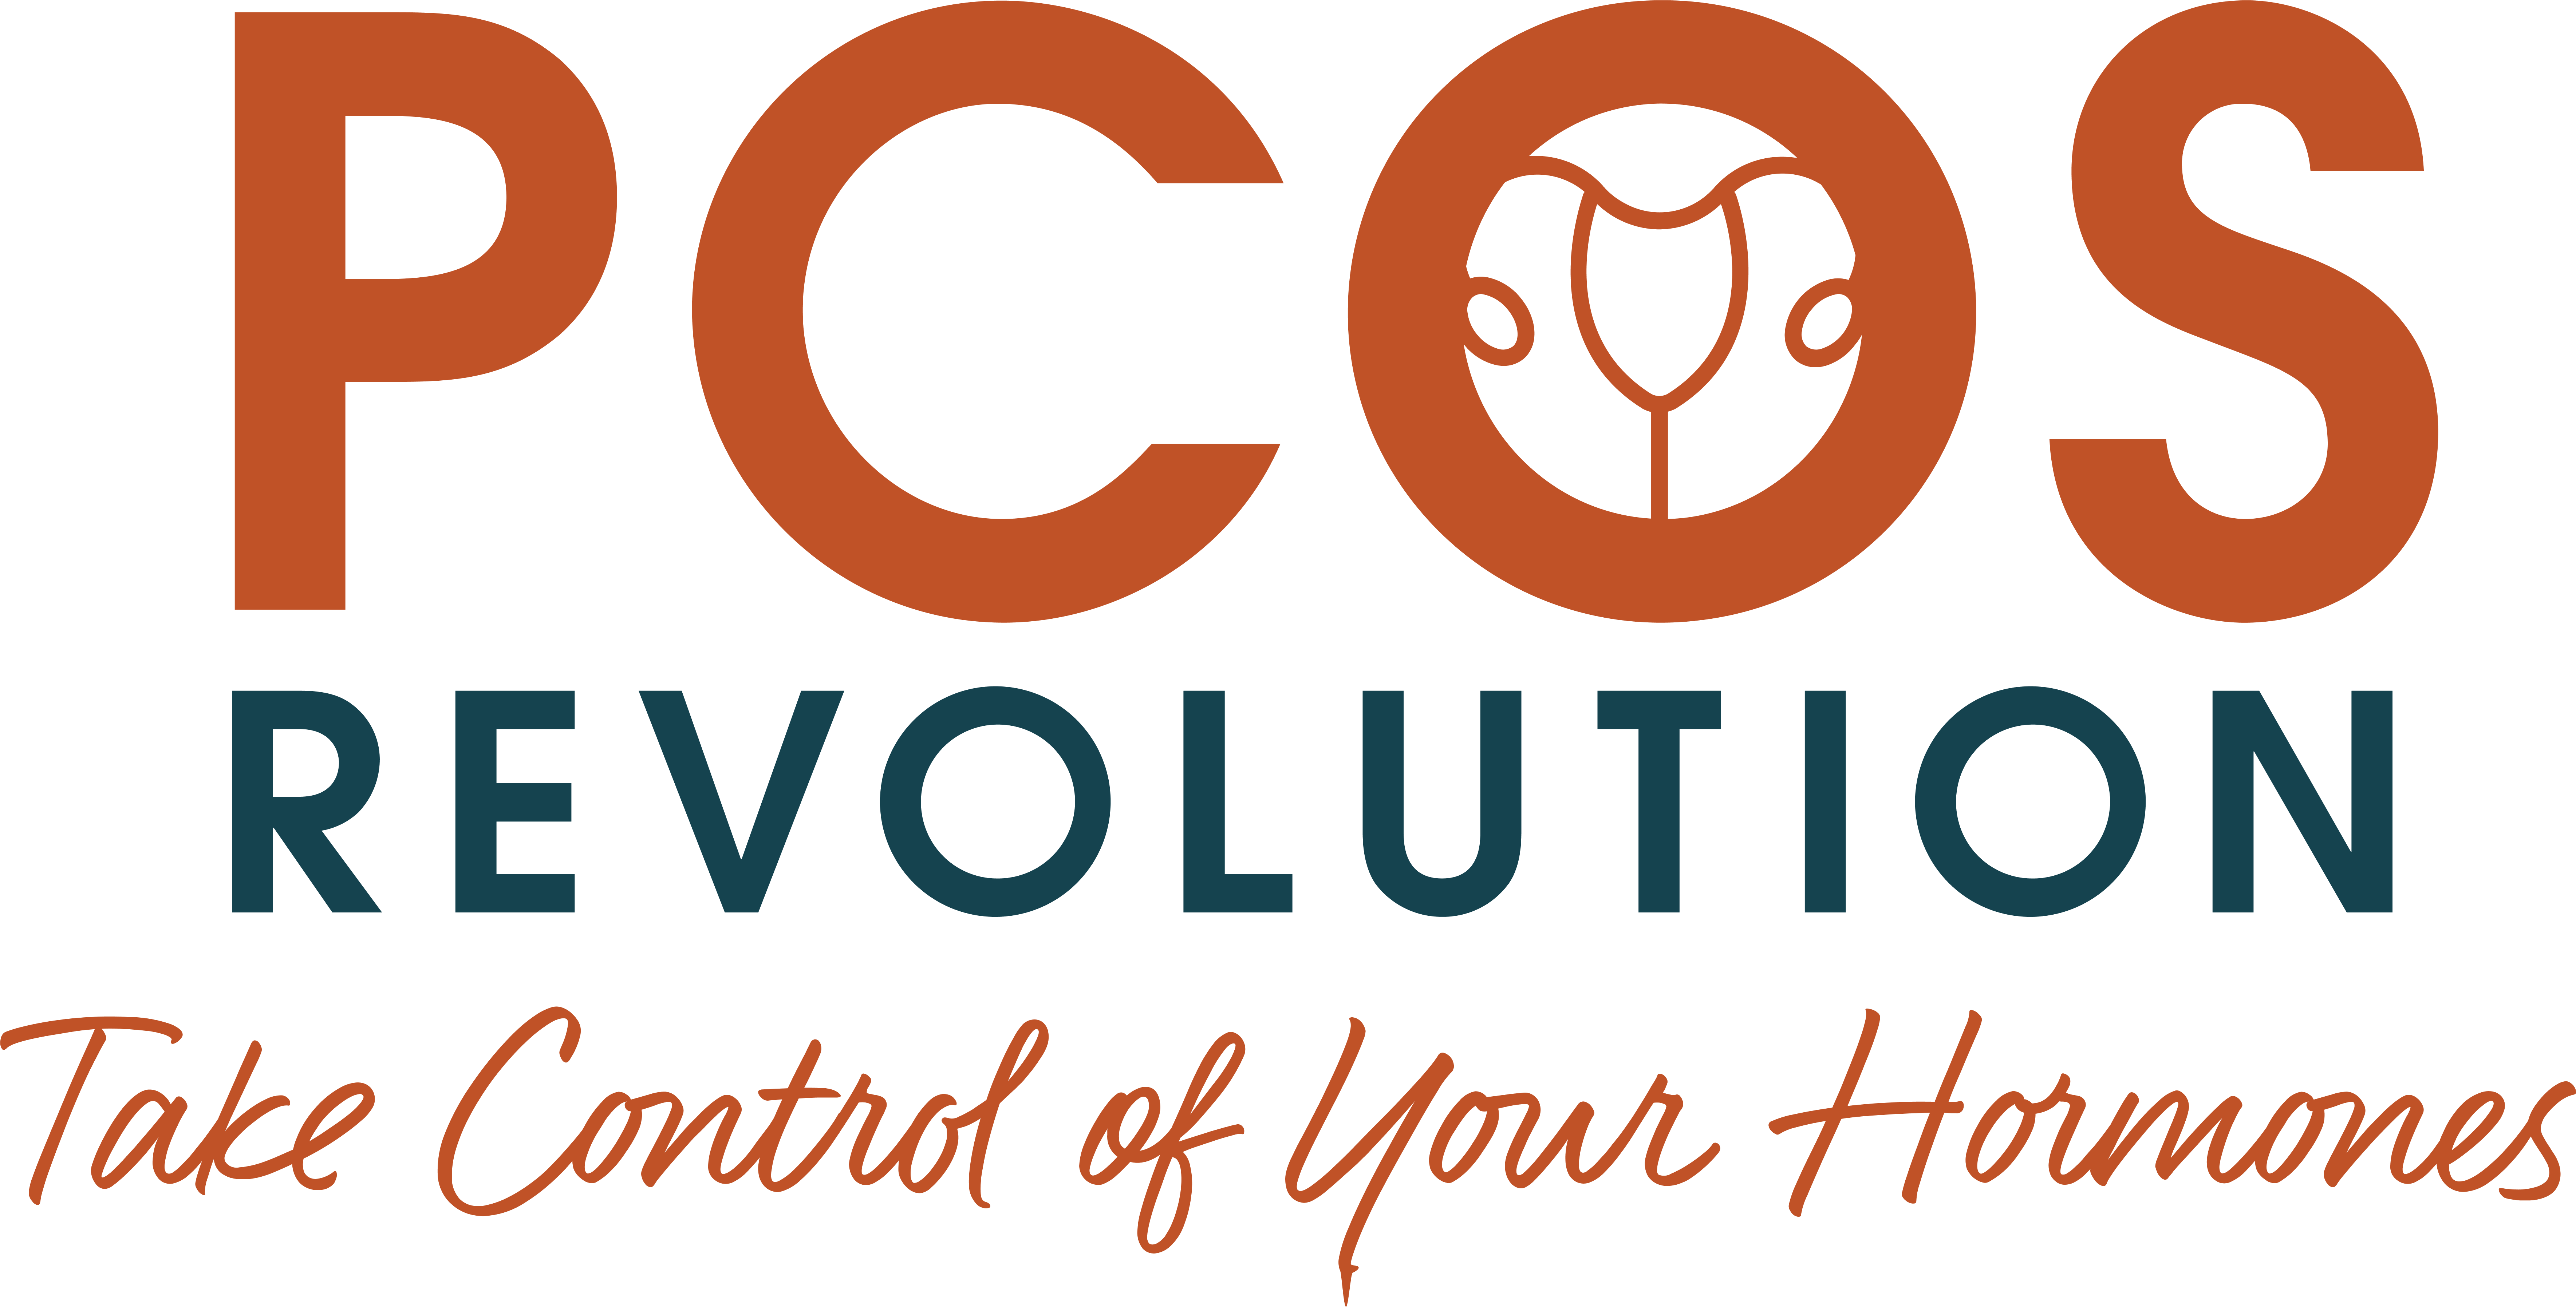 The PCOS Revolution Program